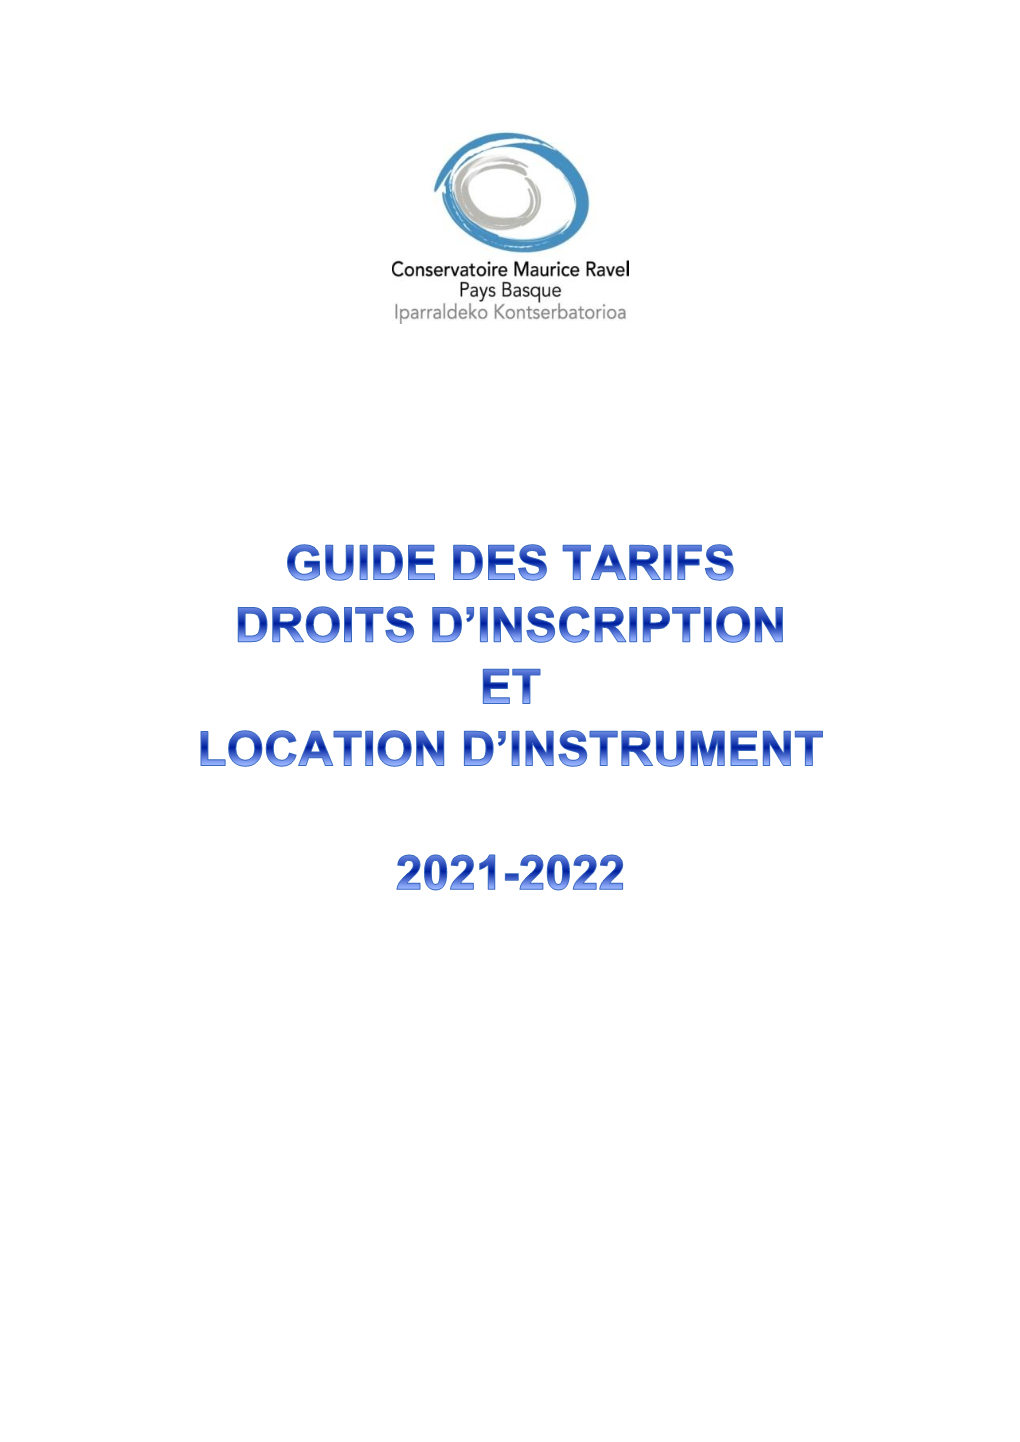 Guide-Tarifs-2021-2022.Pdf